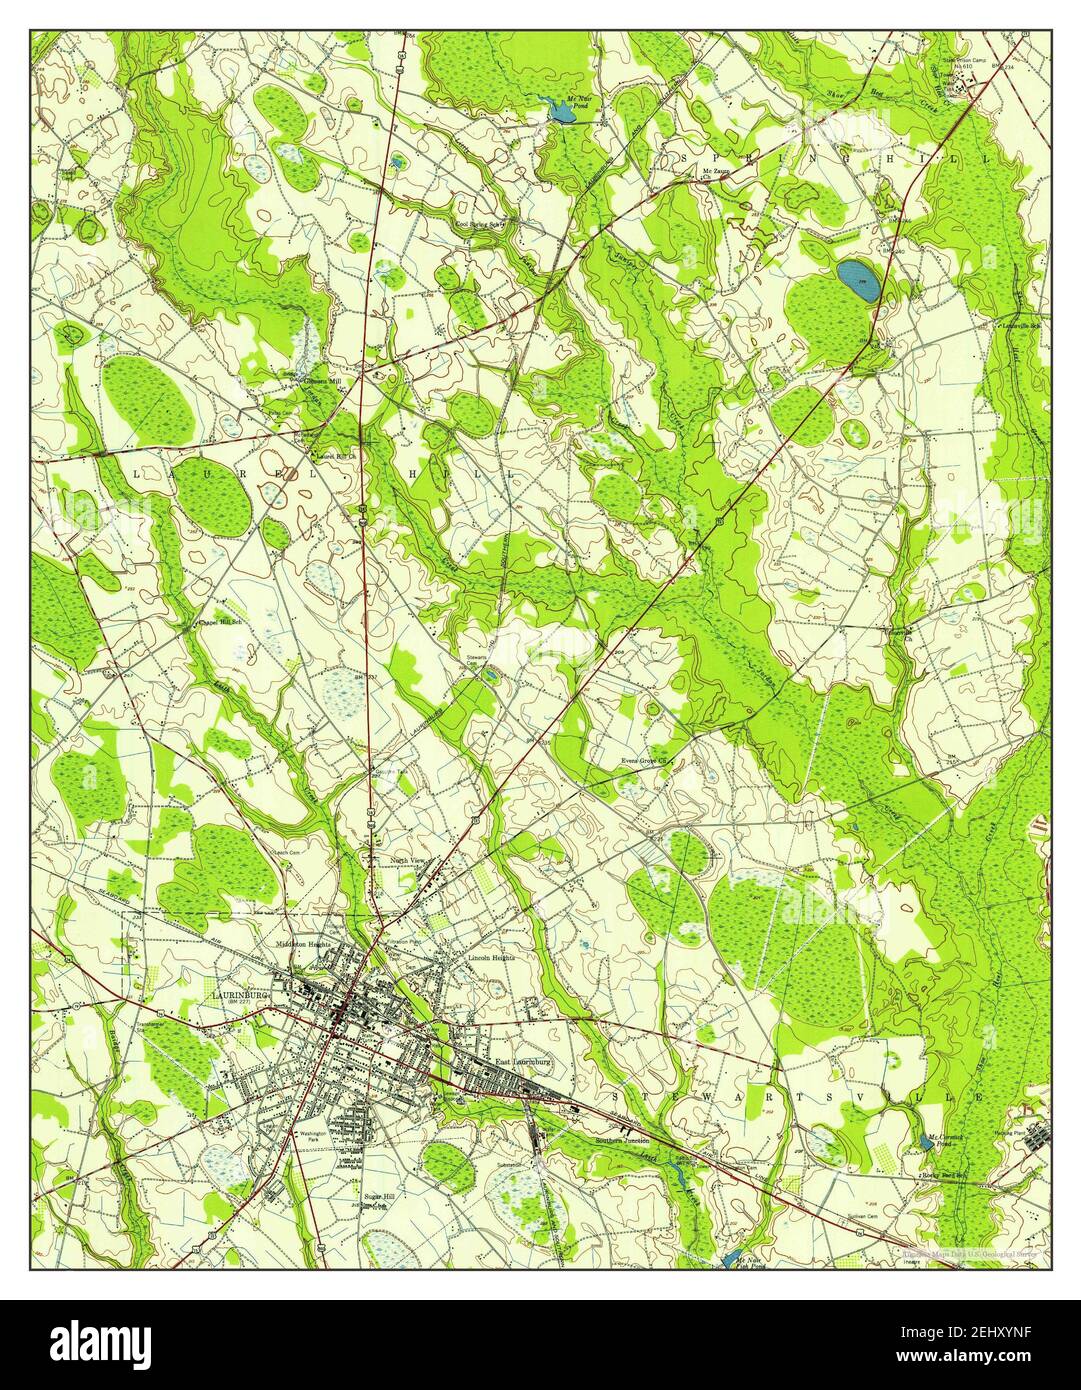 Laurinburg, North Carolina, map 1949, 1:24000, United States of America by Timeless Maps, data U.S. Geological Survey Stock Photo